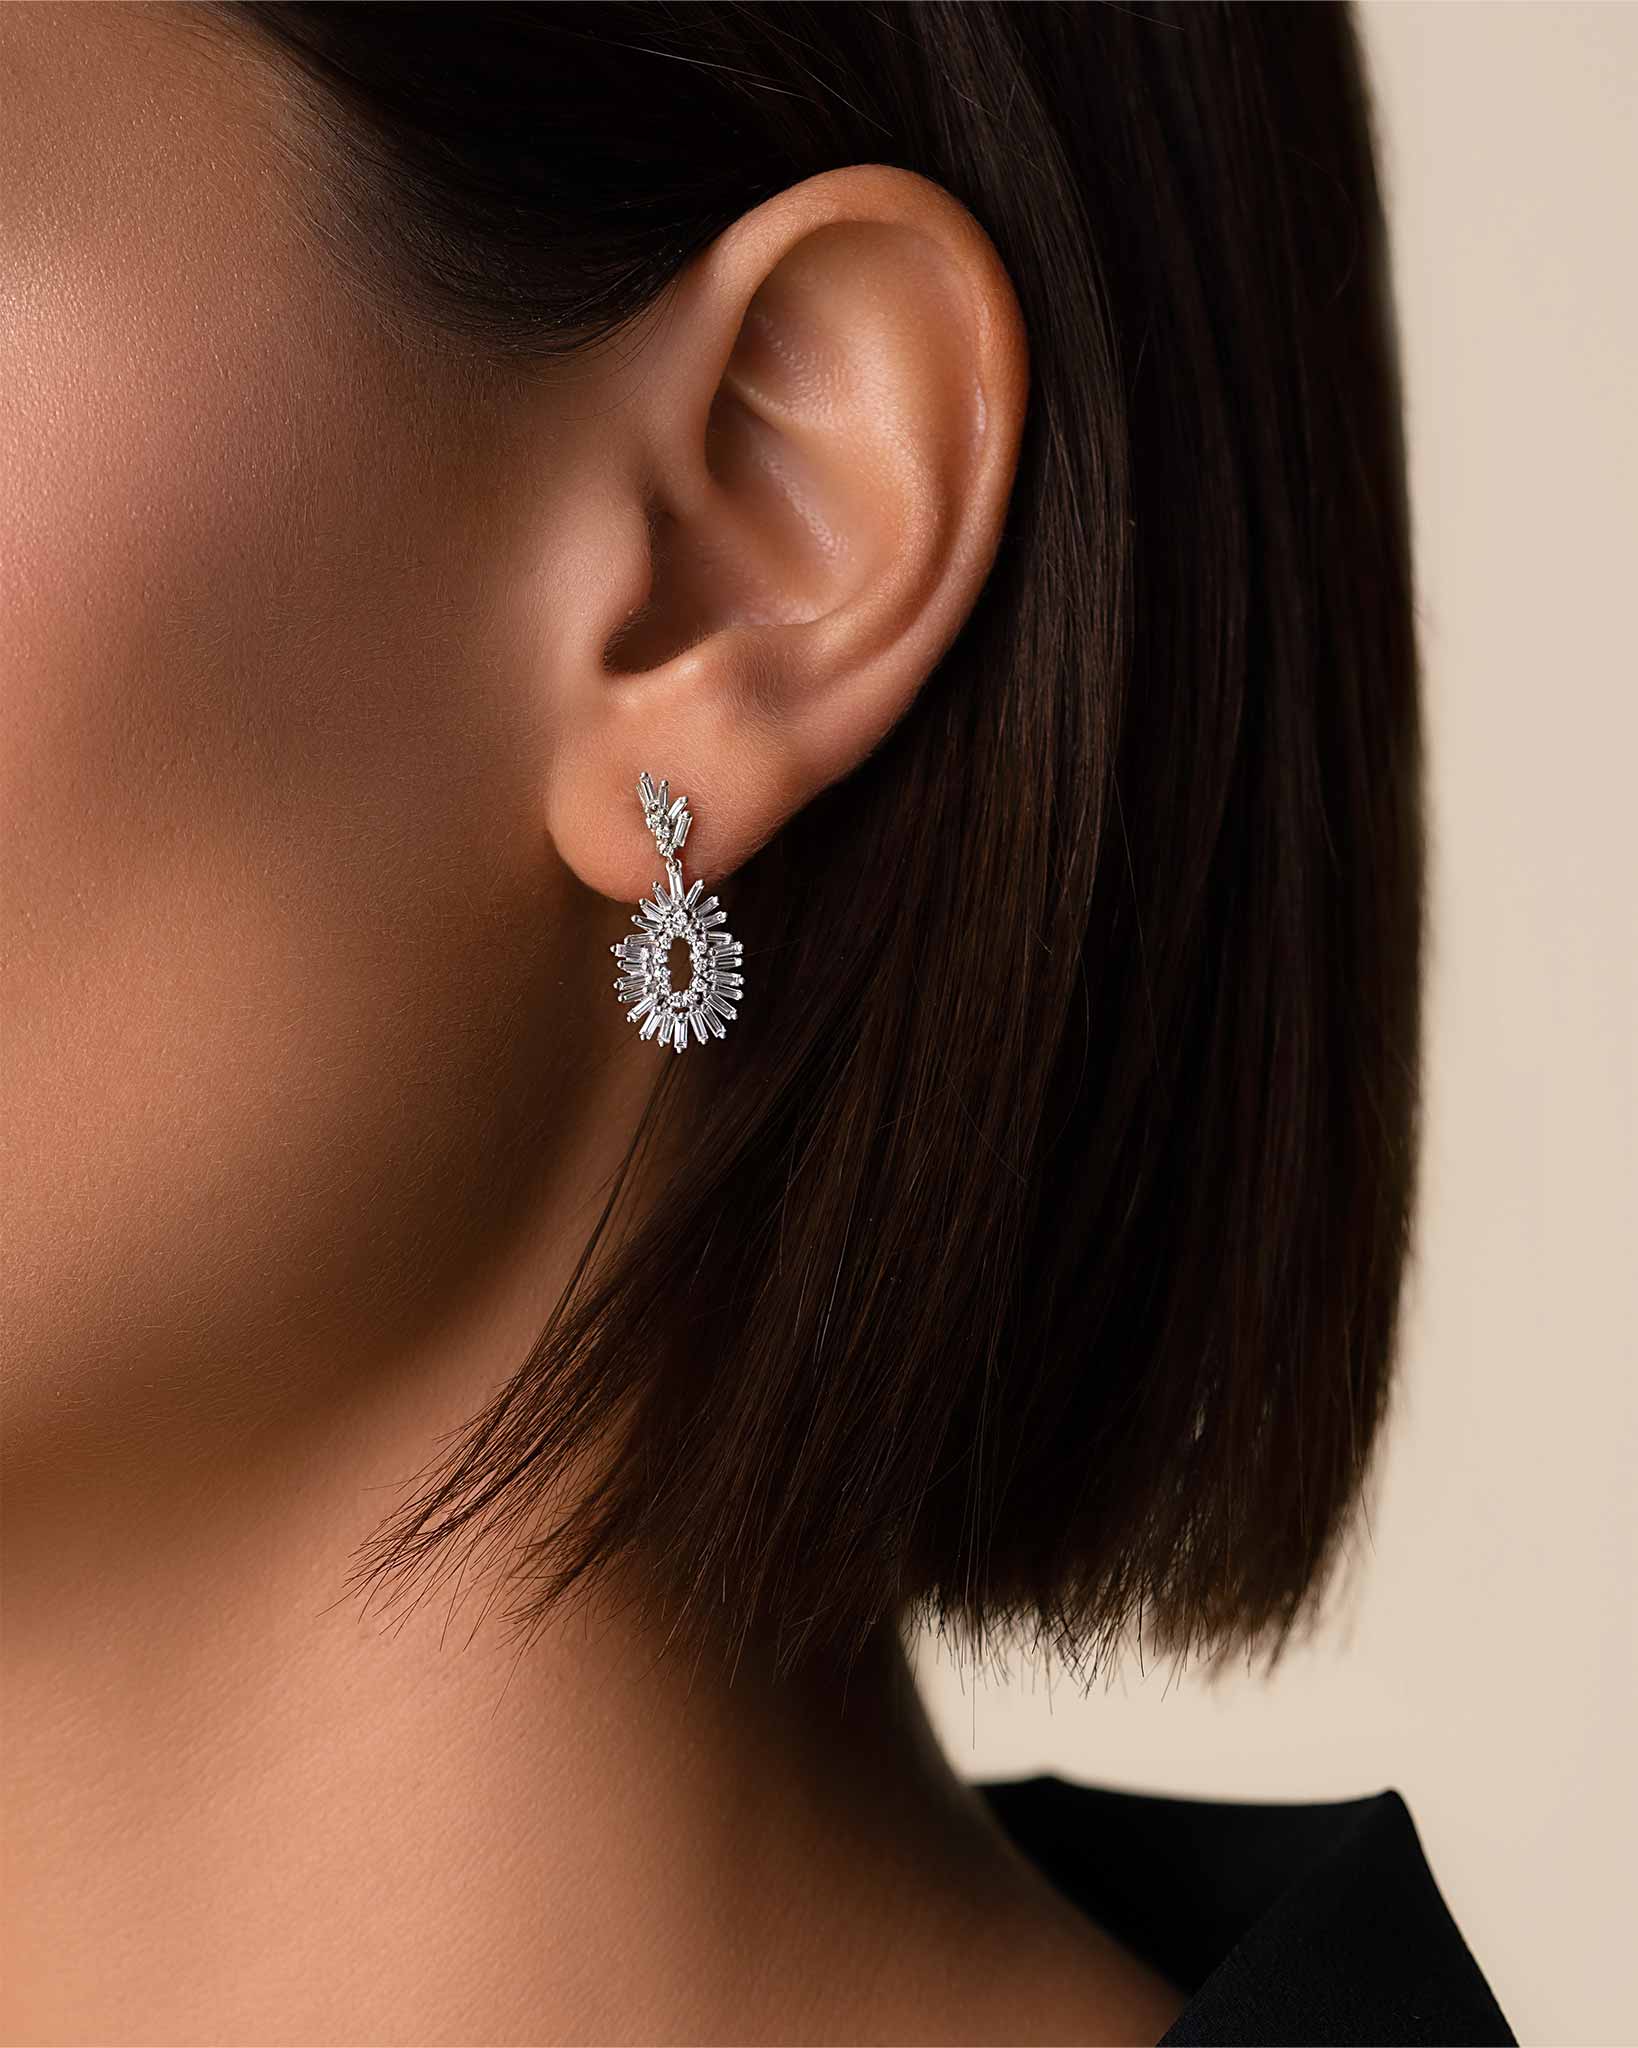 Suzanne Kalan 18kt yellow gold diamond earrings